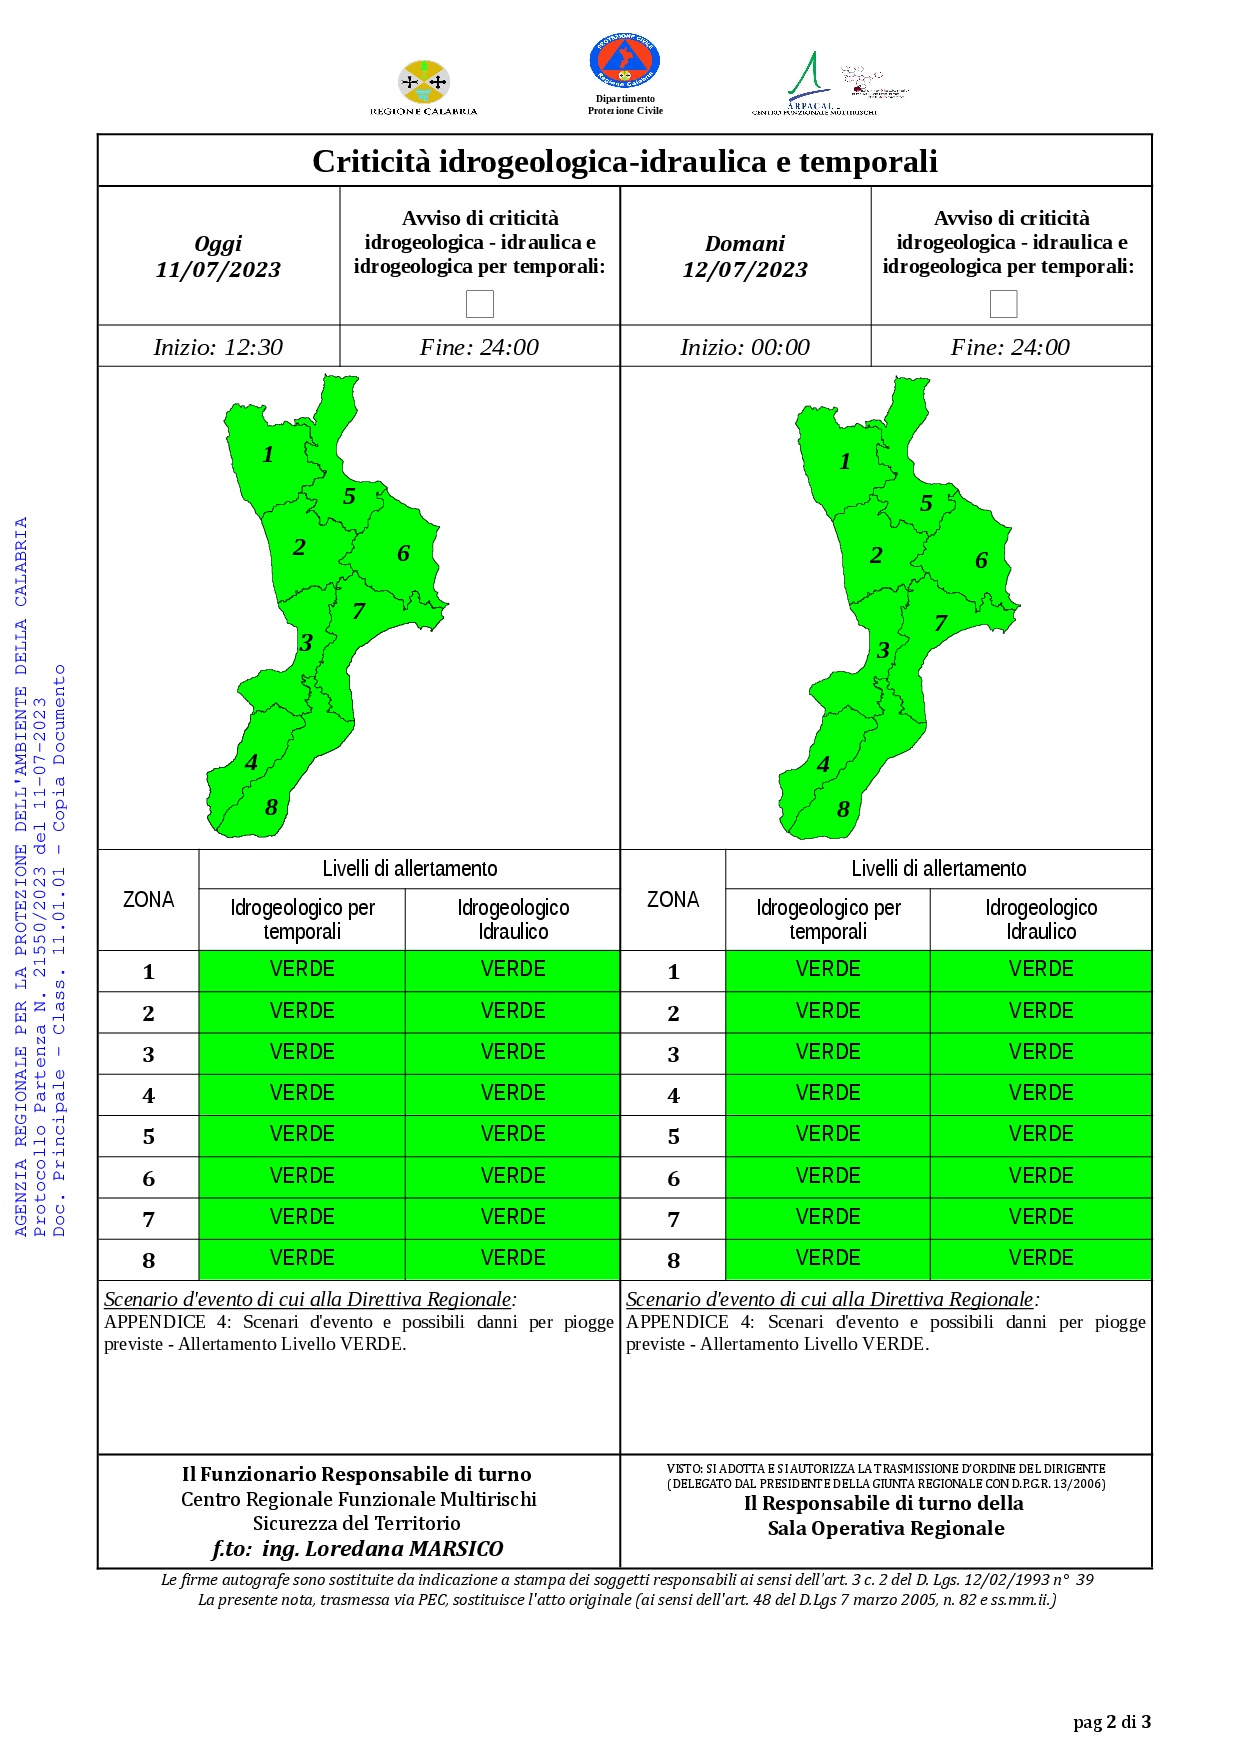 Criticità idrogeologica-idraulica e temporali in Calabria 11-07-2023